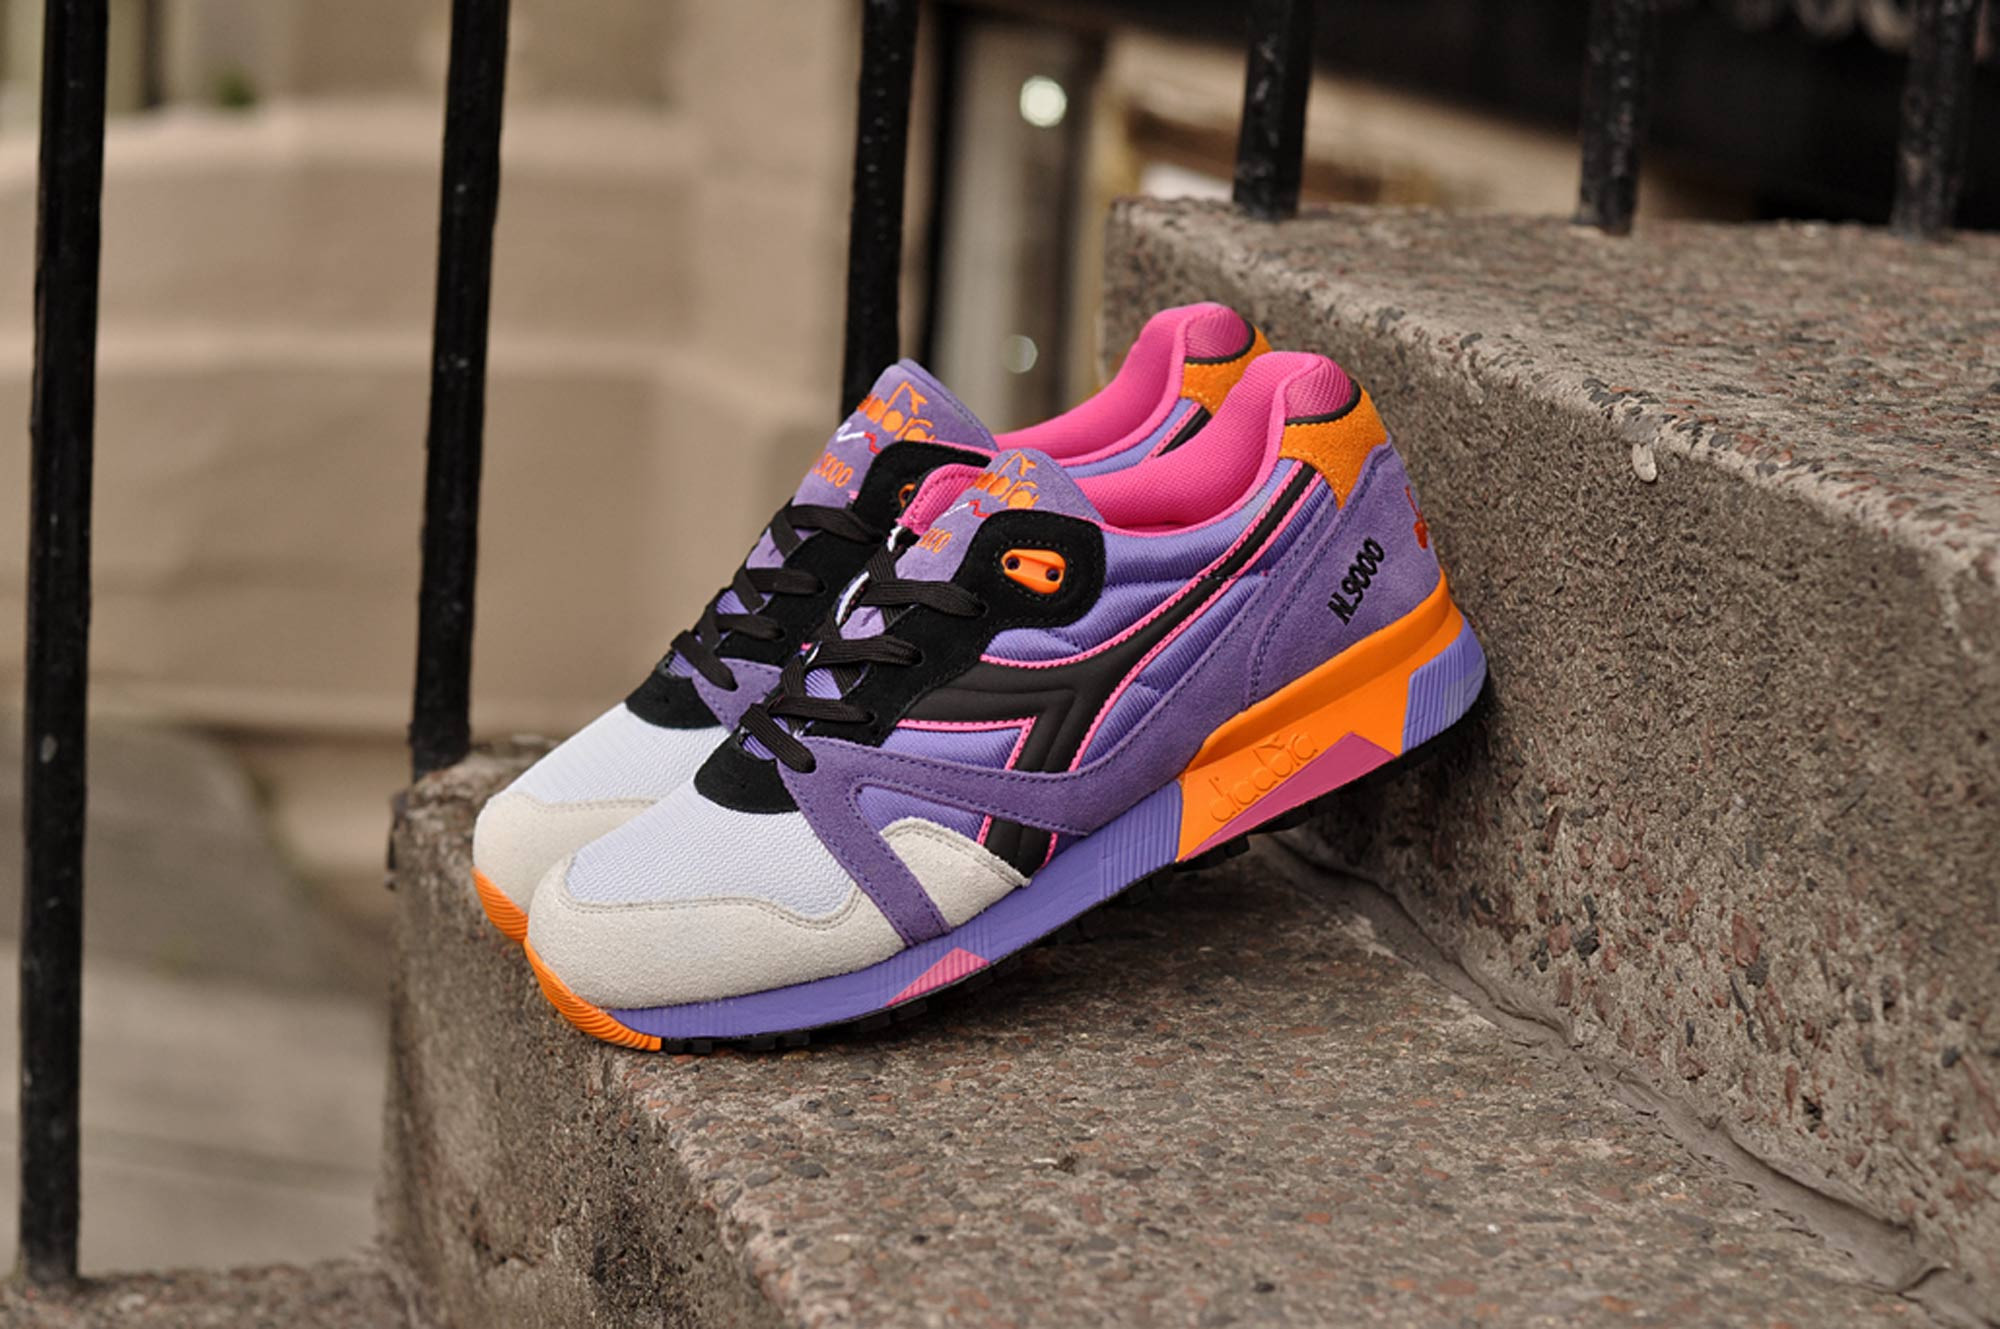 purple diadora sneakers